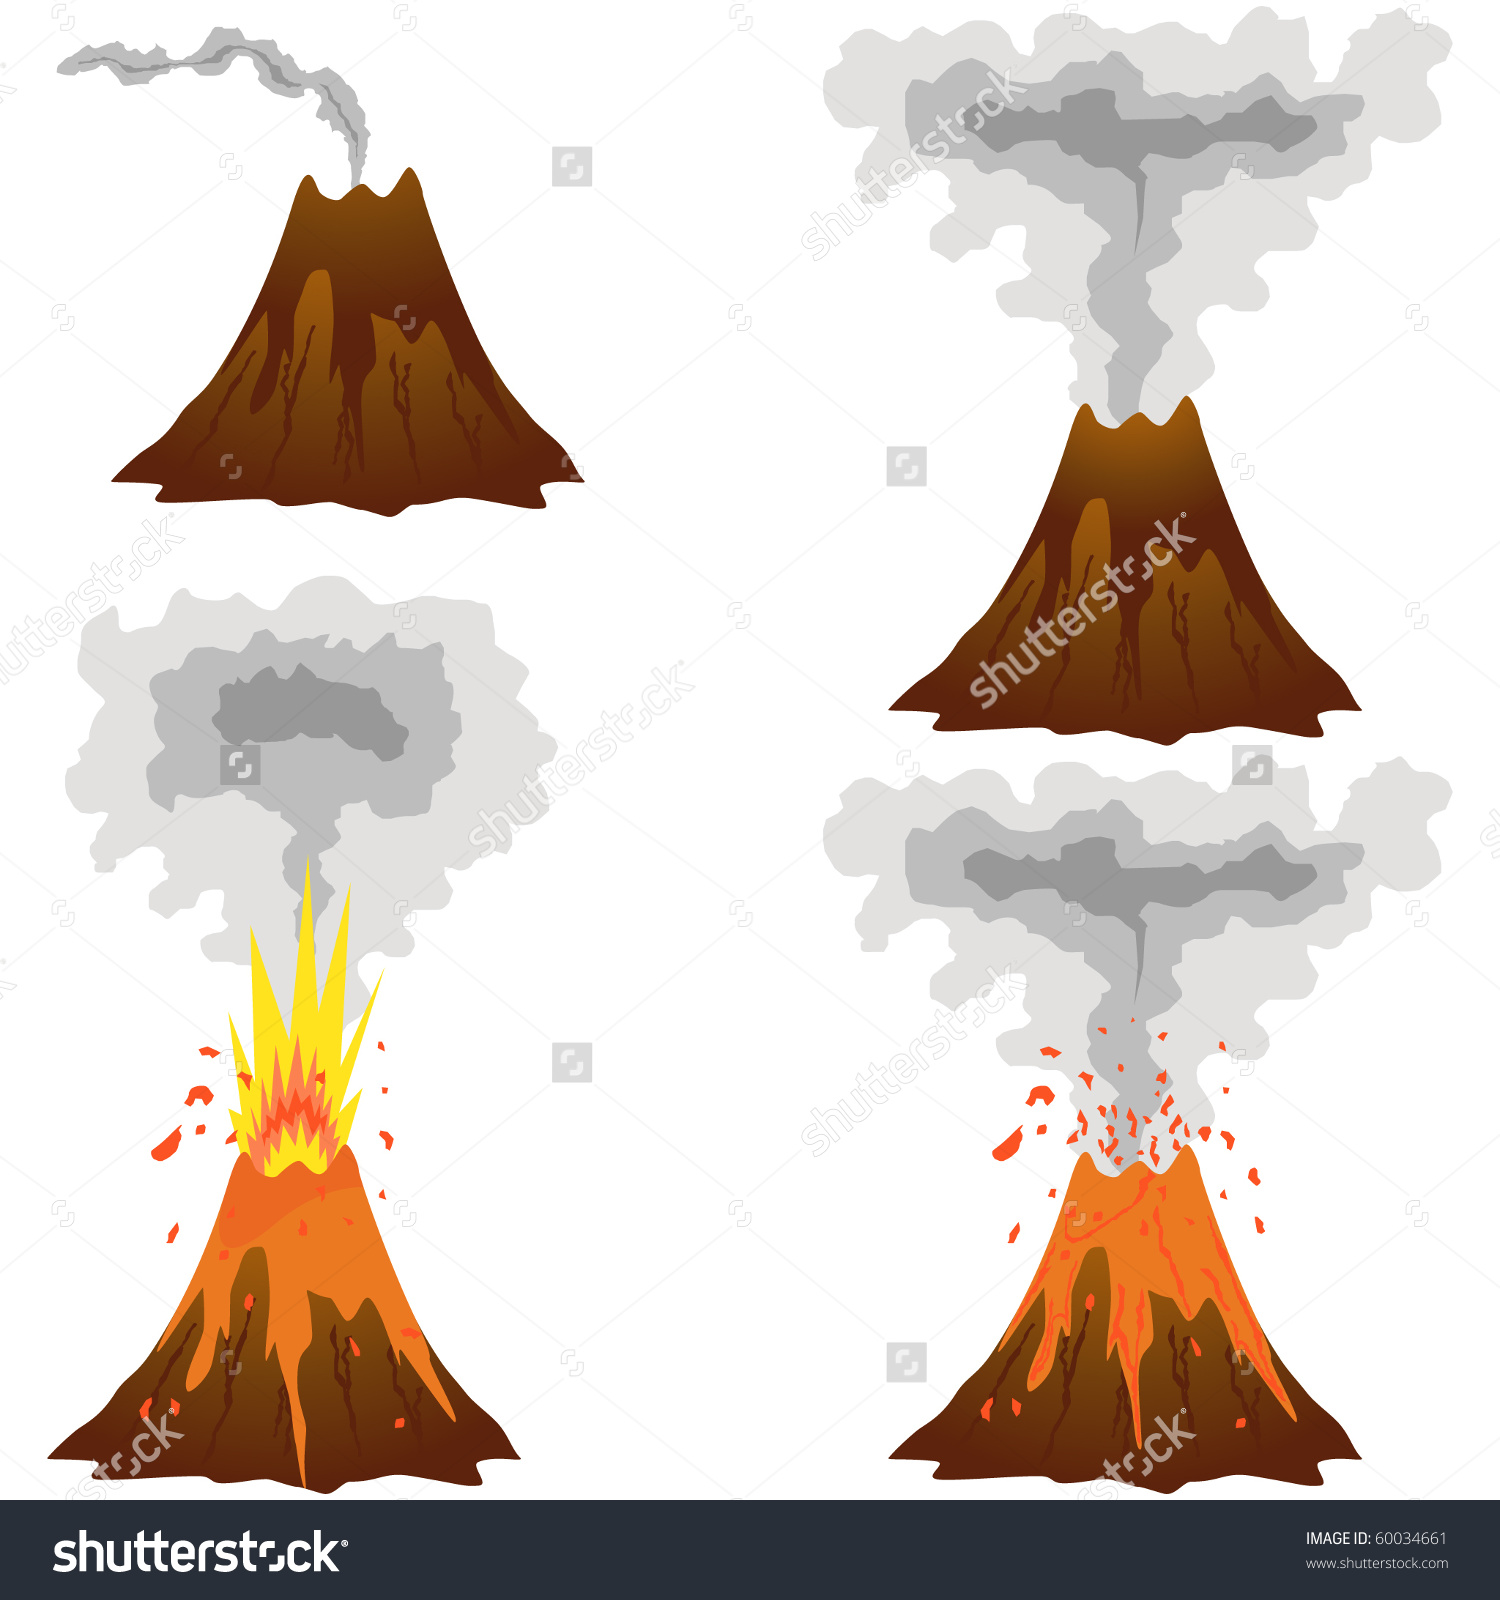 volcano clip art images - photo #49